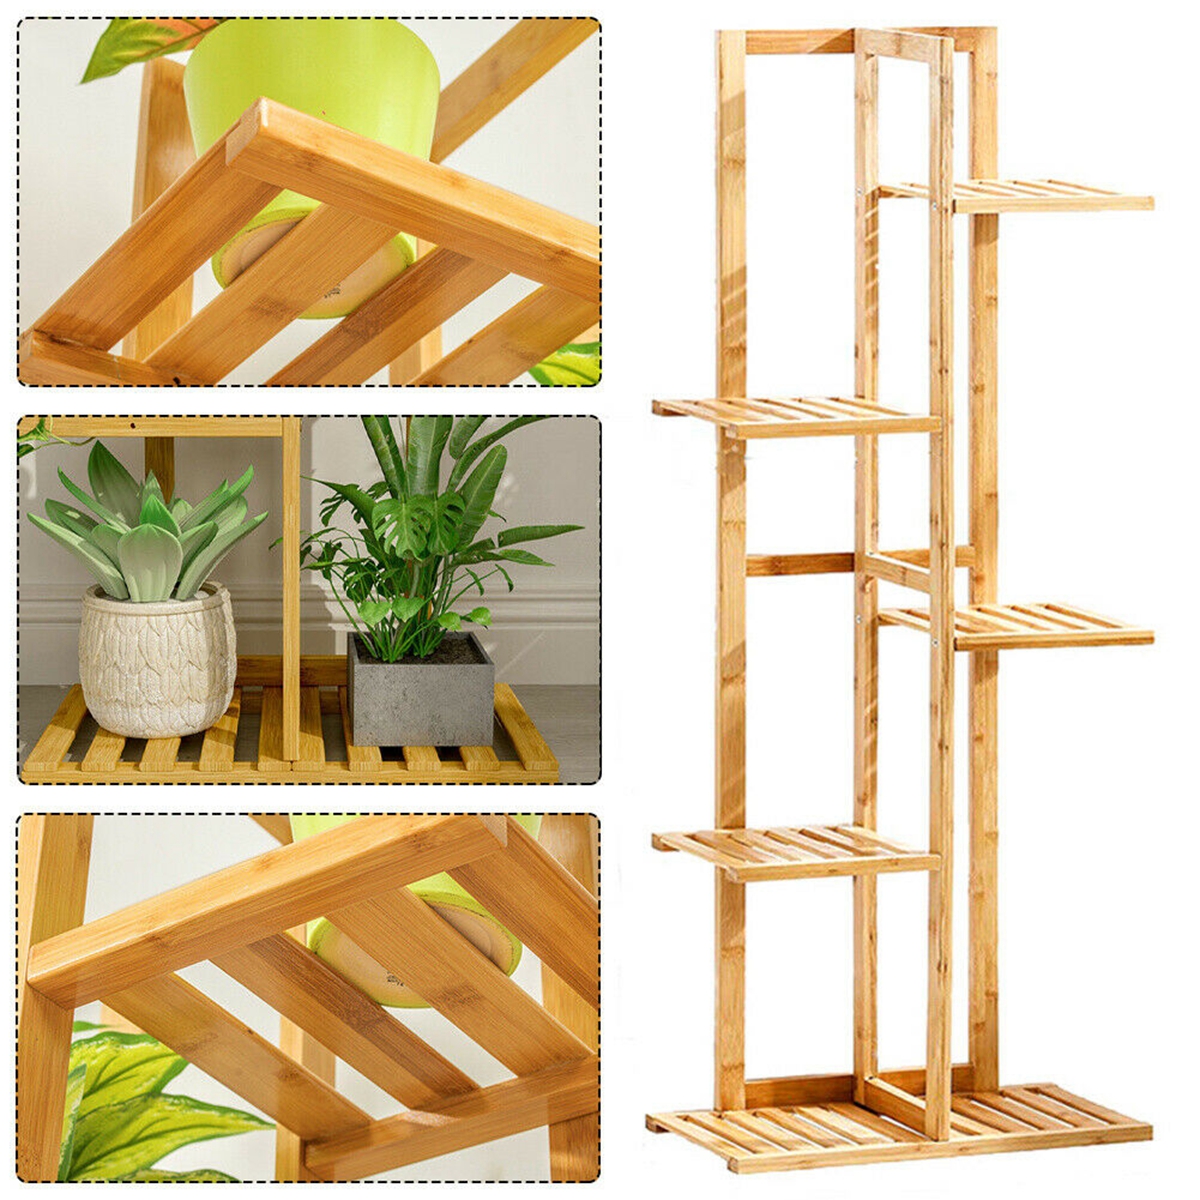 Plant-Flower-Garden-Display-Holder-Stand-Pot-Storage-Rack-Indoor-Outdoor-Decor-1835858-6